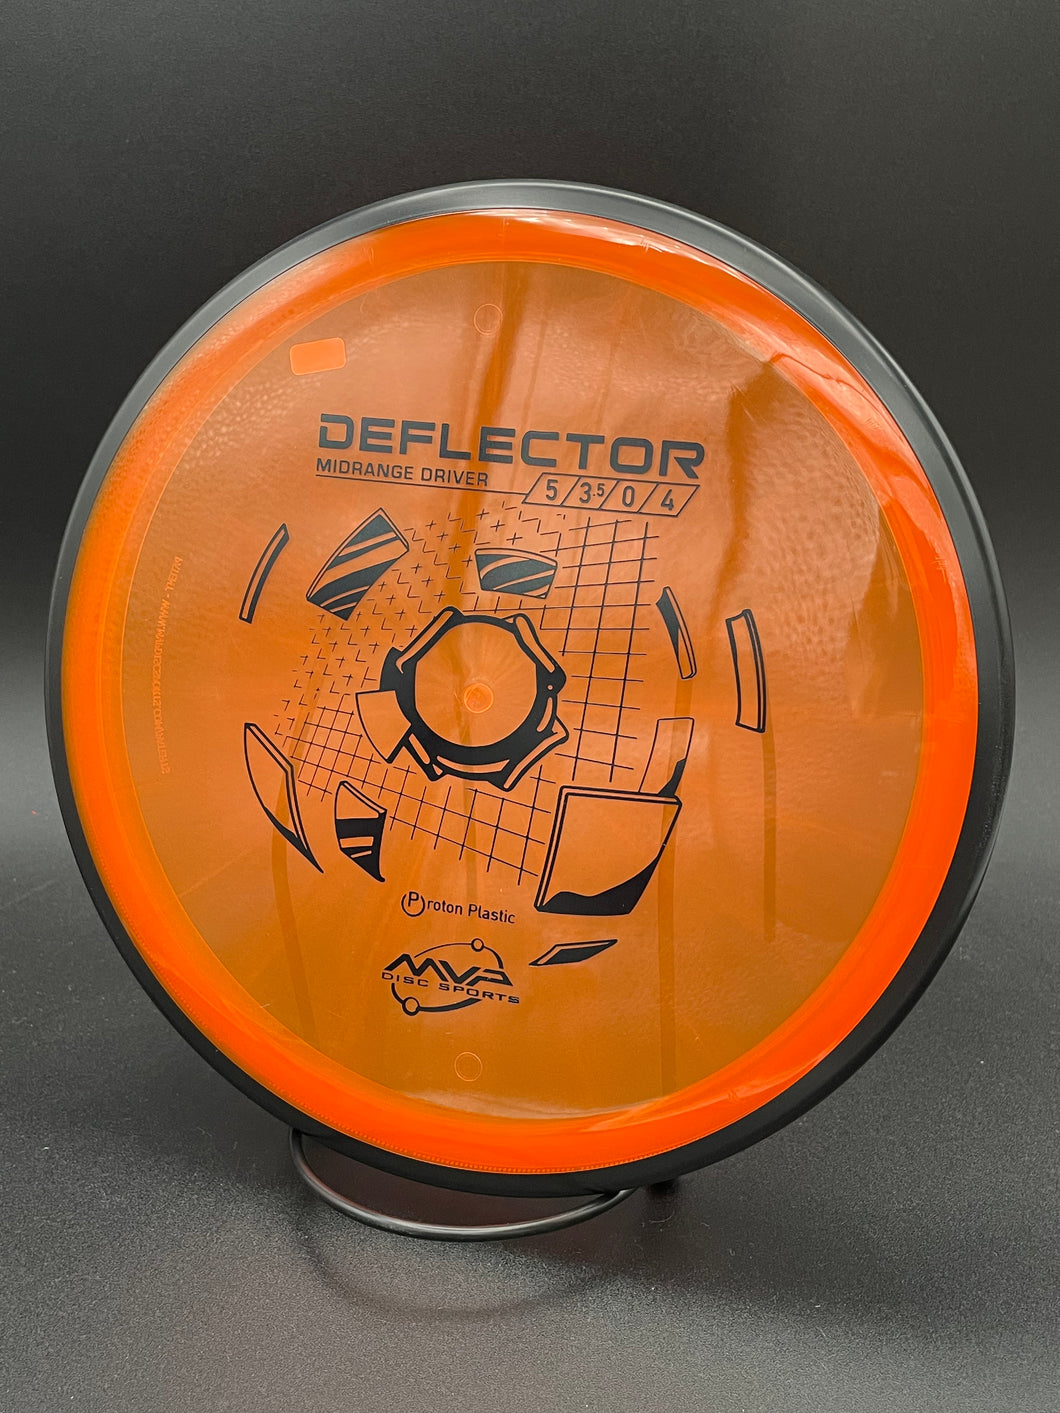 Deflector / MVP Discs / Proton